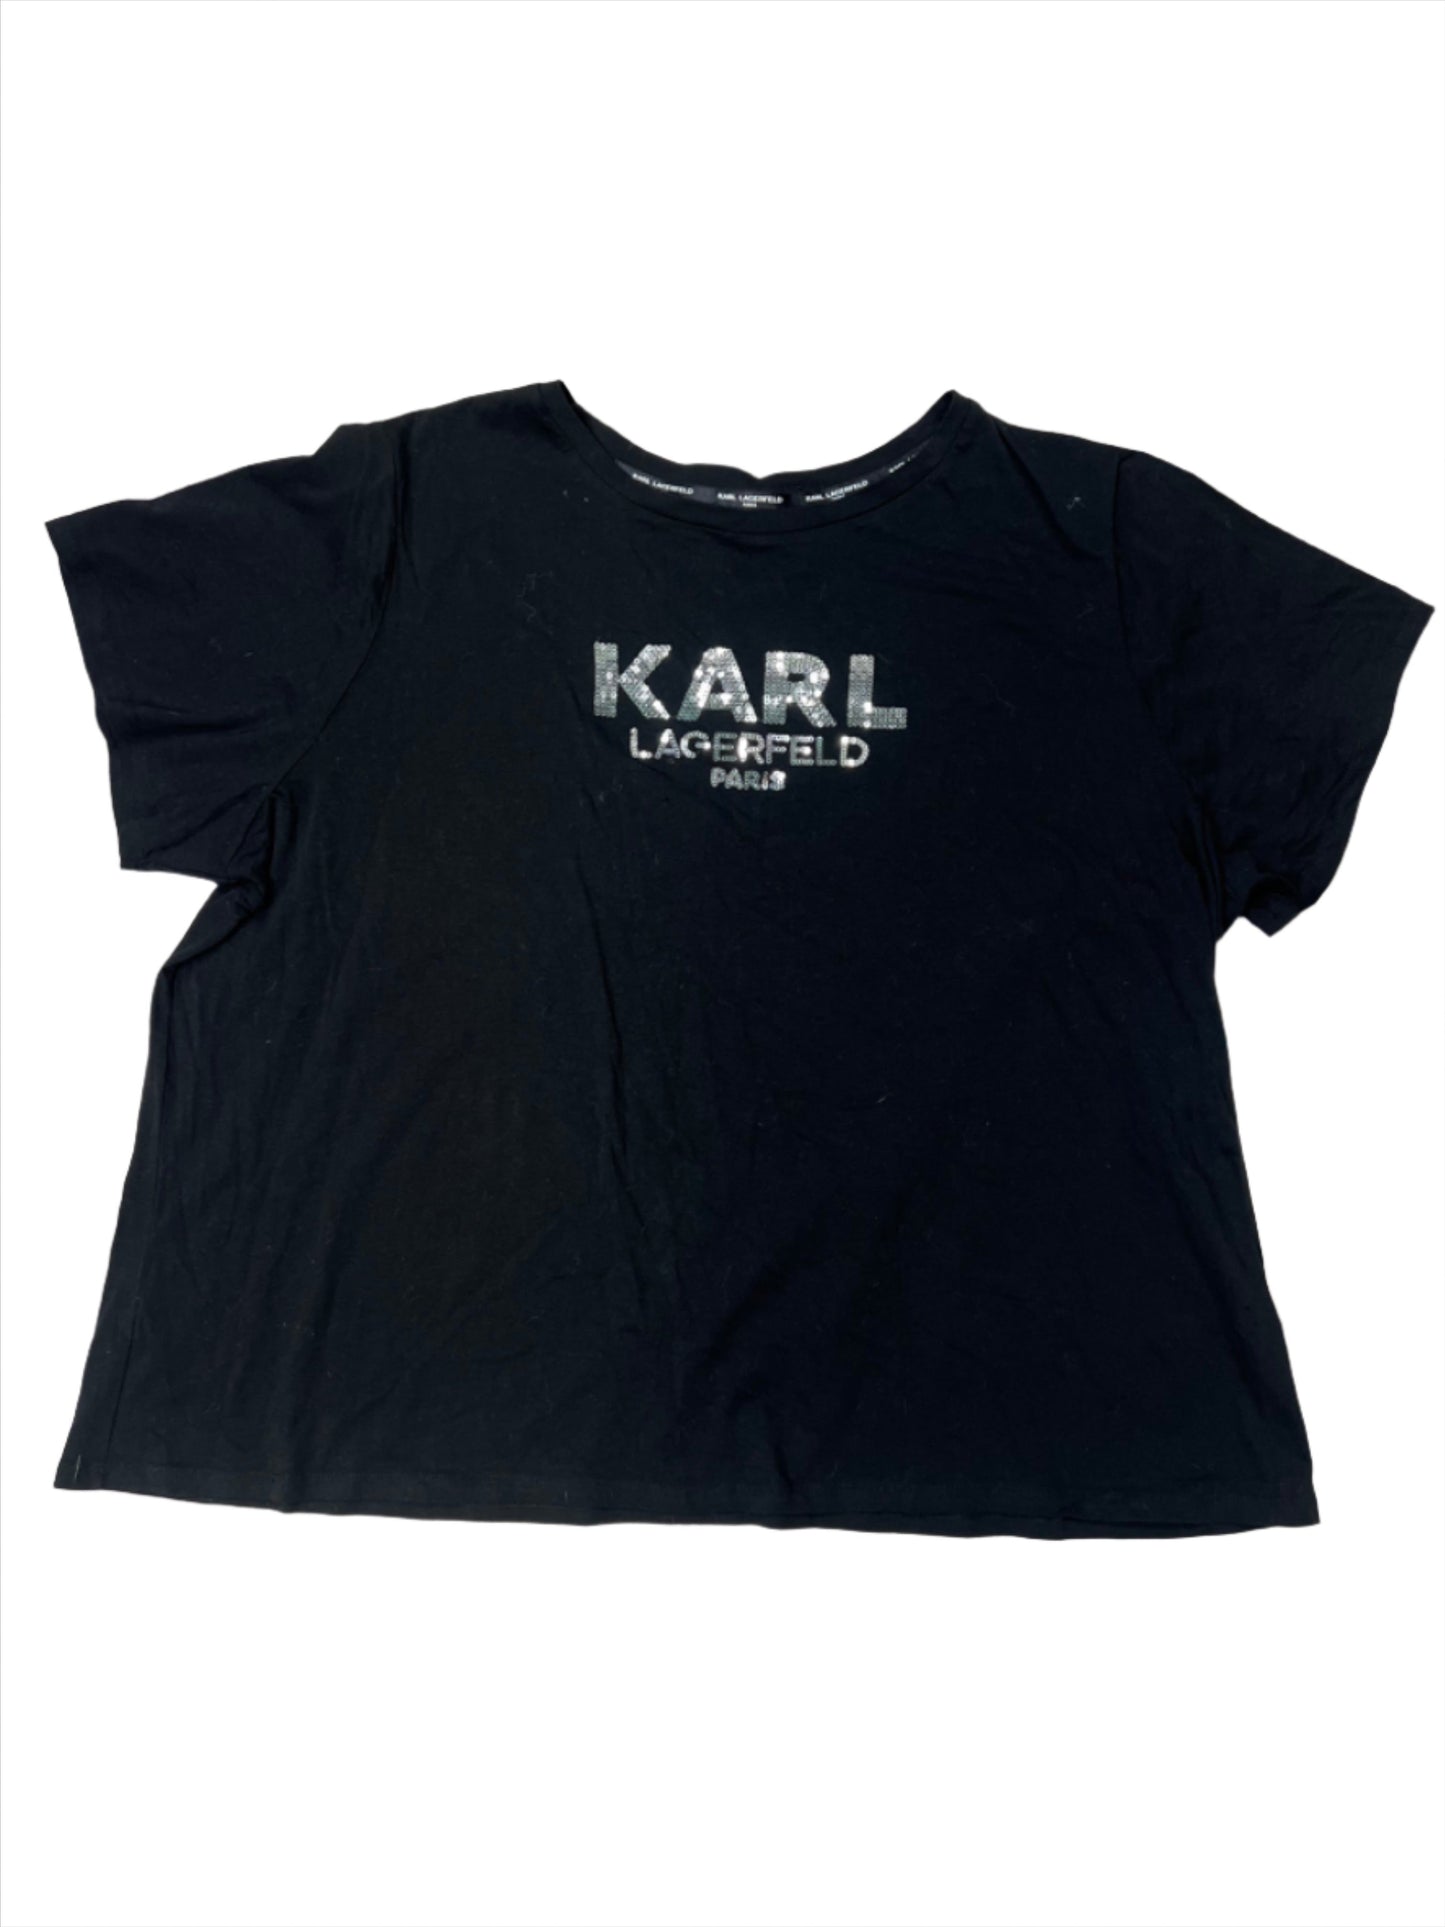 Black Top Short Sleeve Designer Karl Lagerfeld, Size 3x